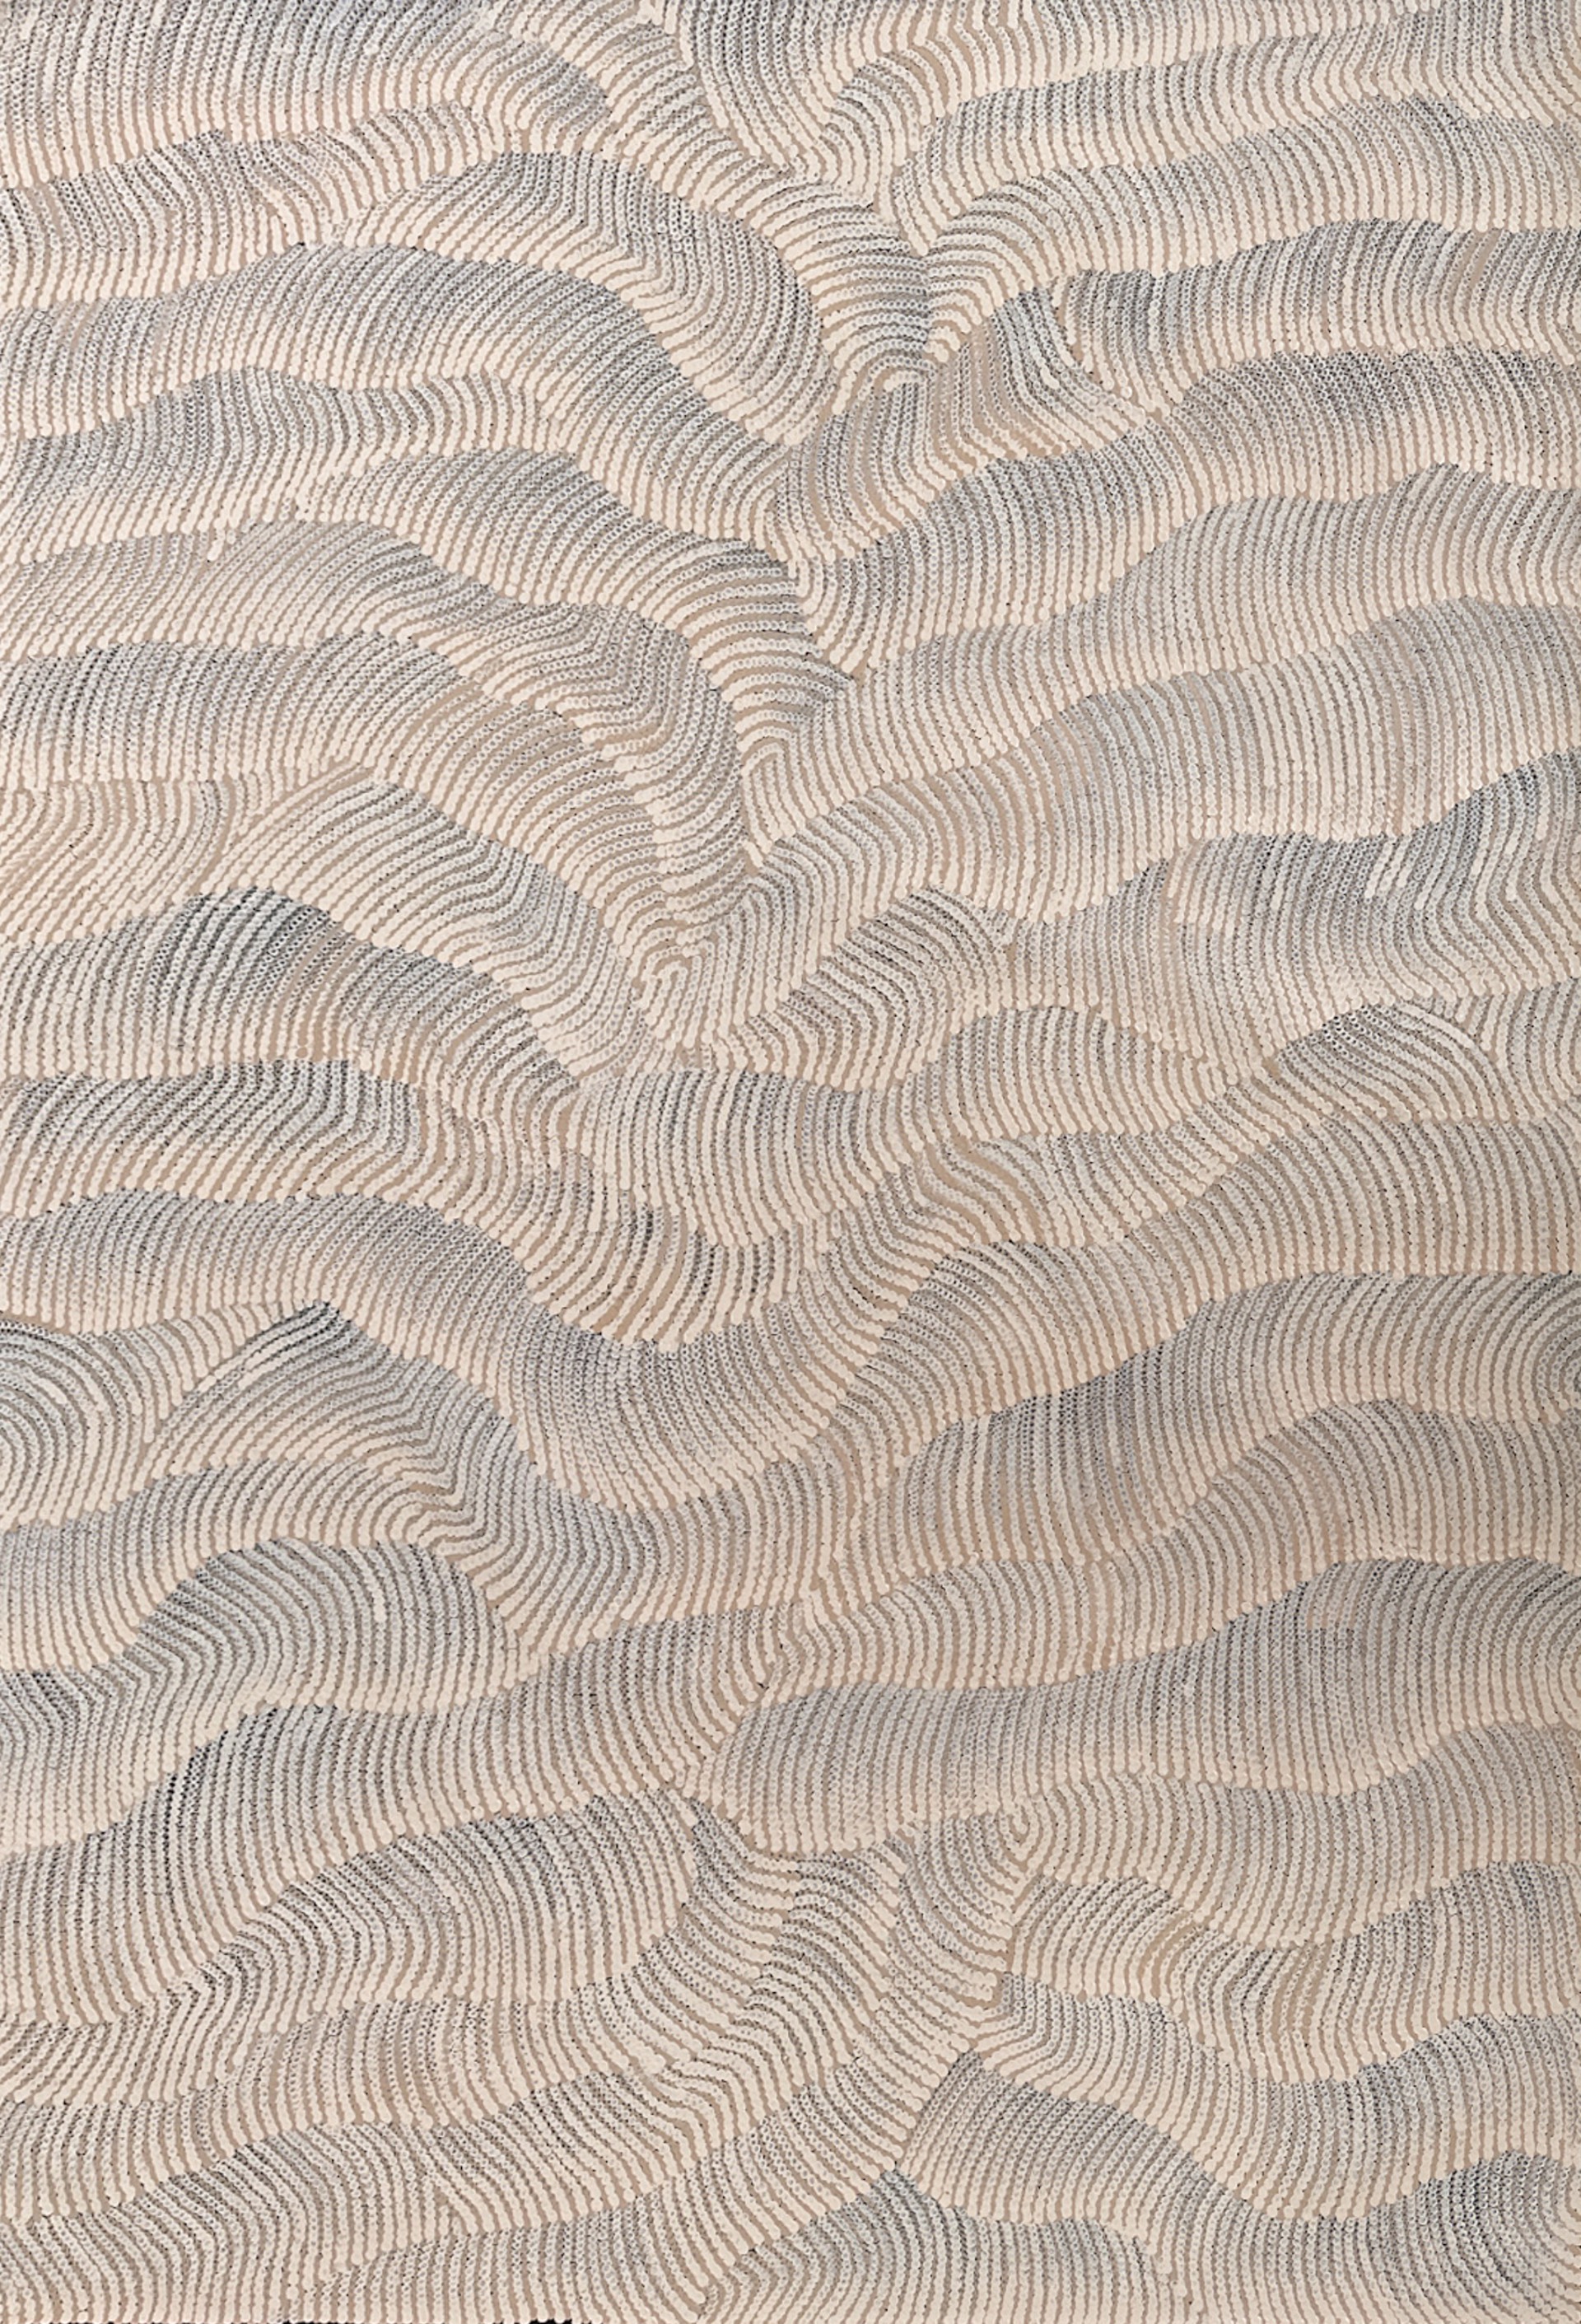 Sand Dune by Maureen Hudson I